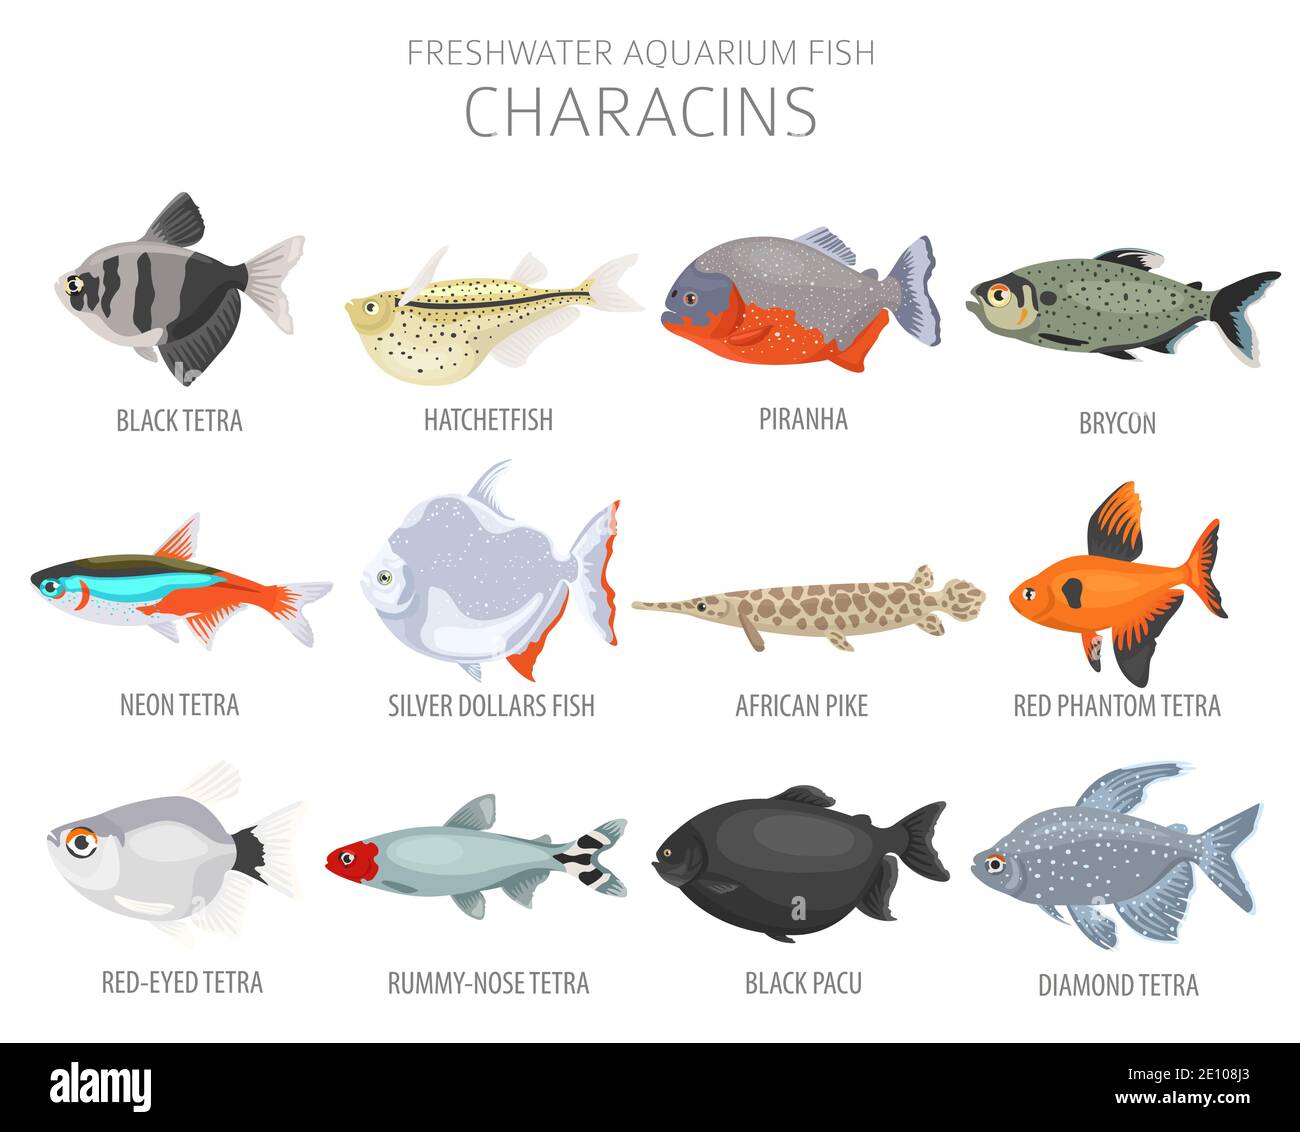 Characins fish. Freshwater aquarium fish icon set flat style isolated on white.  Vector illustration Stock Vector